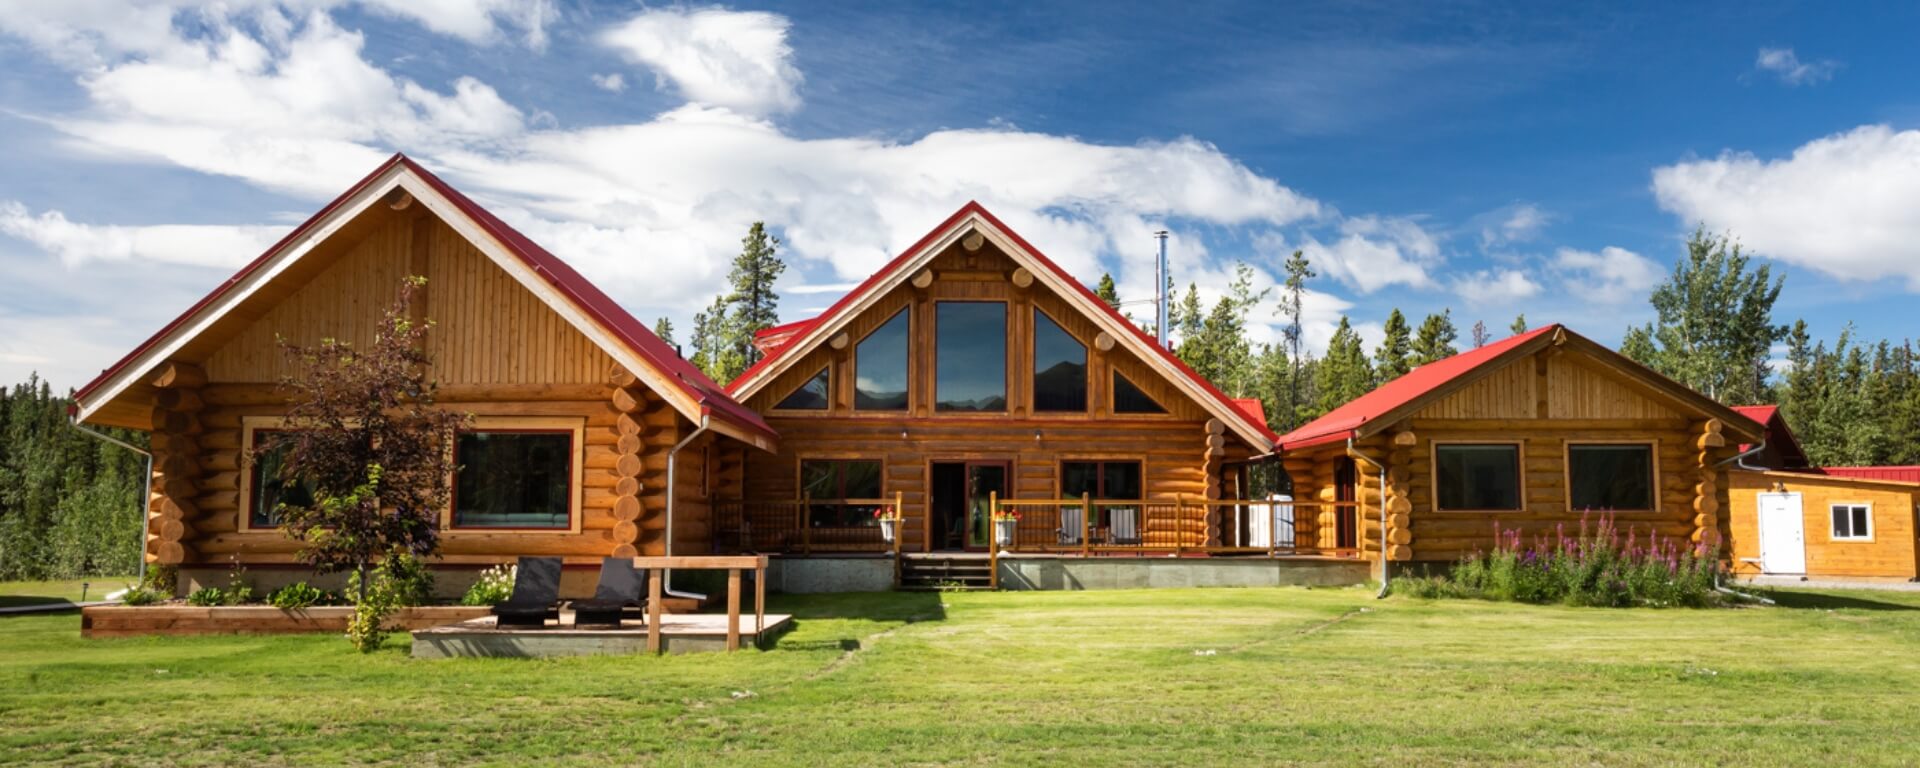 Aurora Dreams: An All-inclusive Autumn Lodge Stay in the Yukon